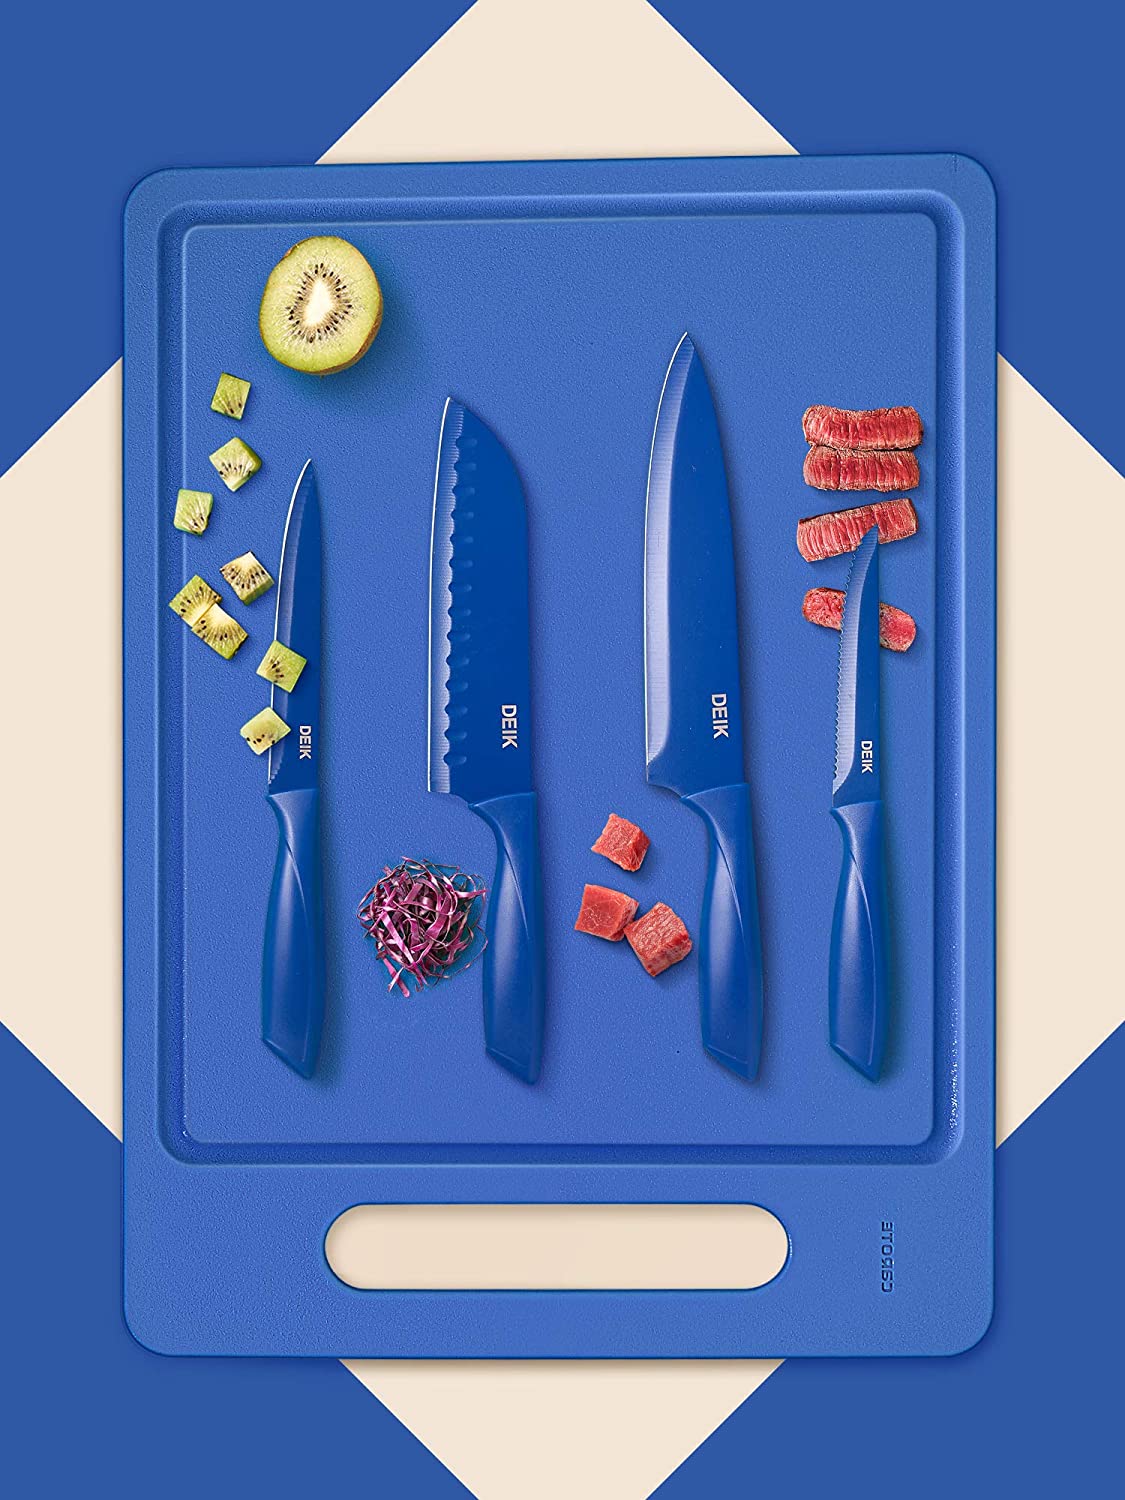 DEIK Knife Set, High Carbon Stainless Steel Kitchen Knife Set 16PCS, Super  Sharp Cutlery Knife with Carving Fork and Serrated Steak Knives, Wood Knife  Block